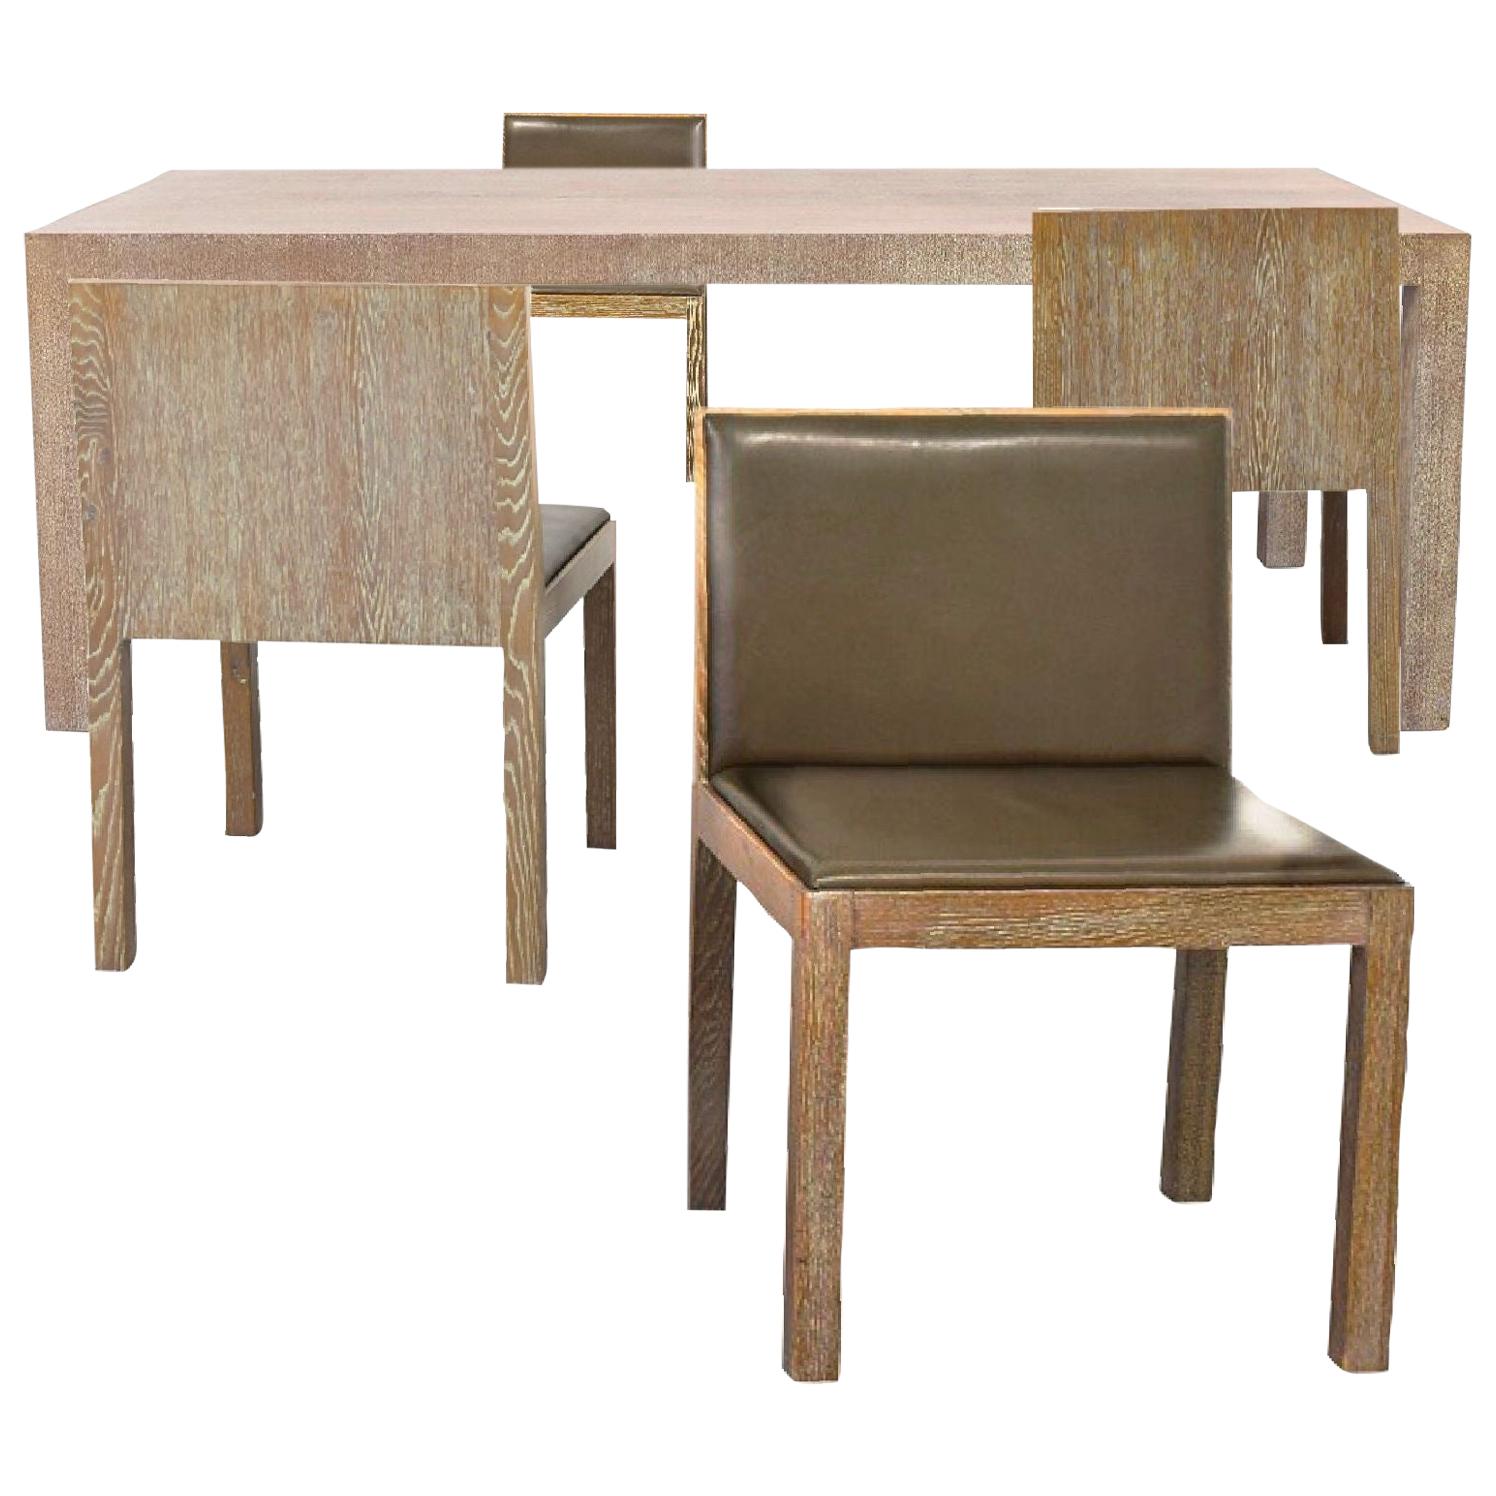 Giorgio Armani Casa Cerused Oak Dining Table and Chairs Set for Four, Leather